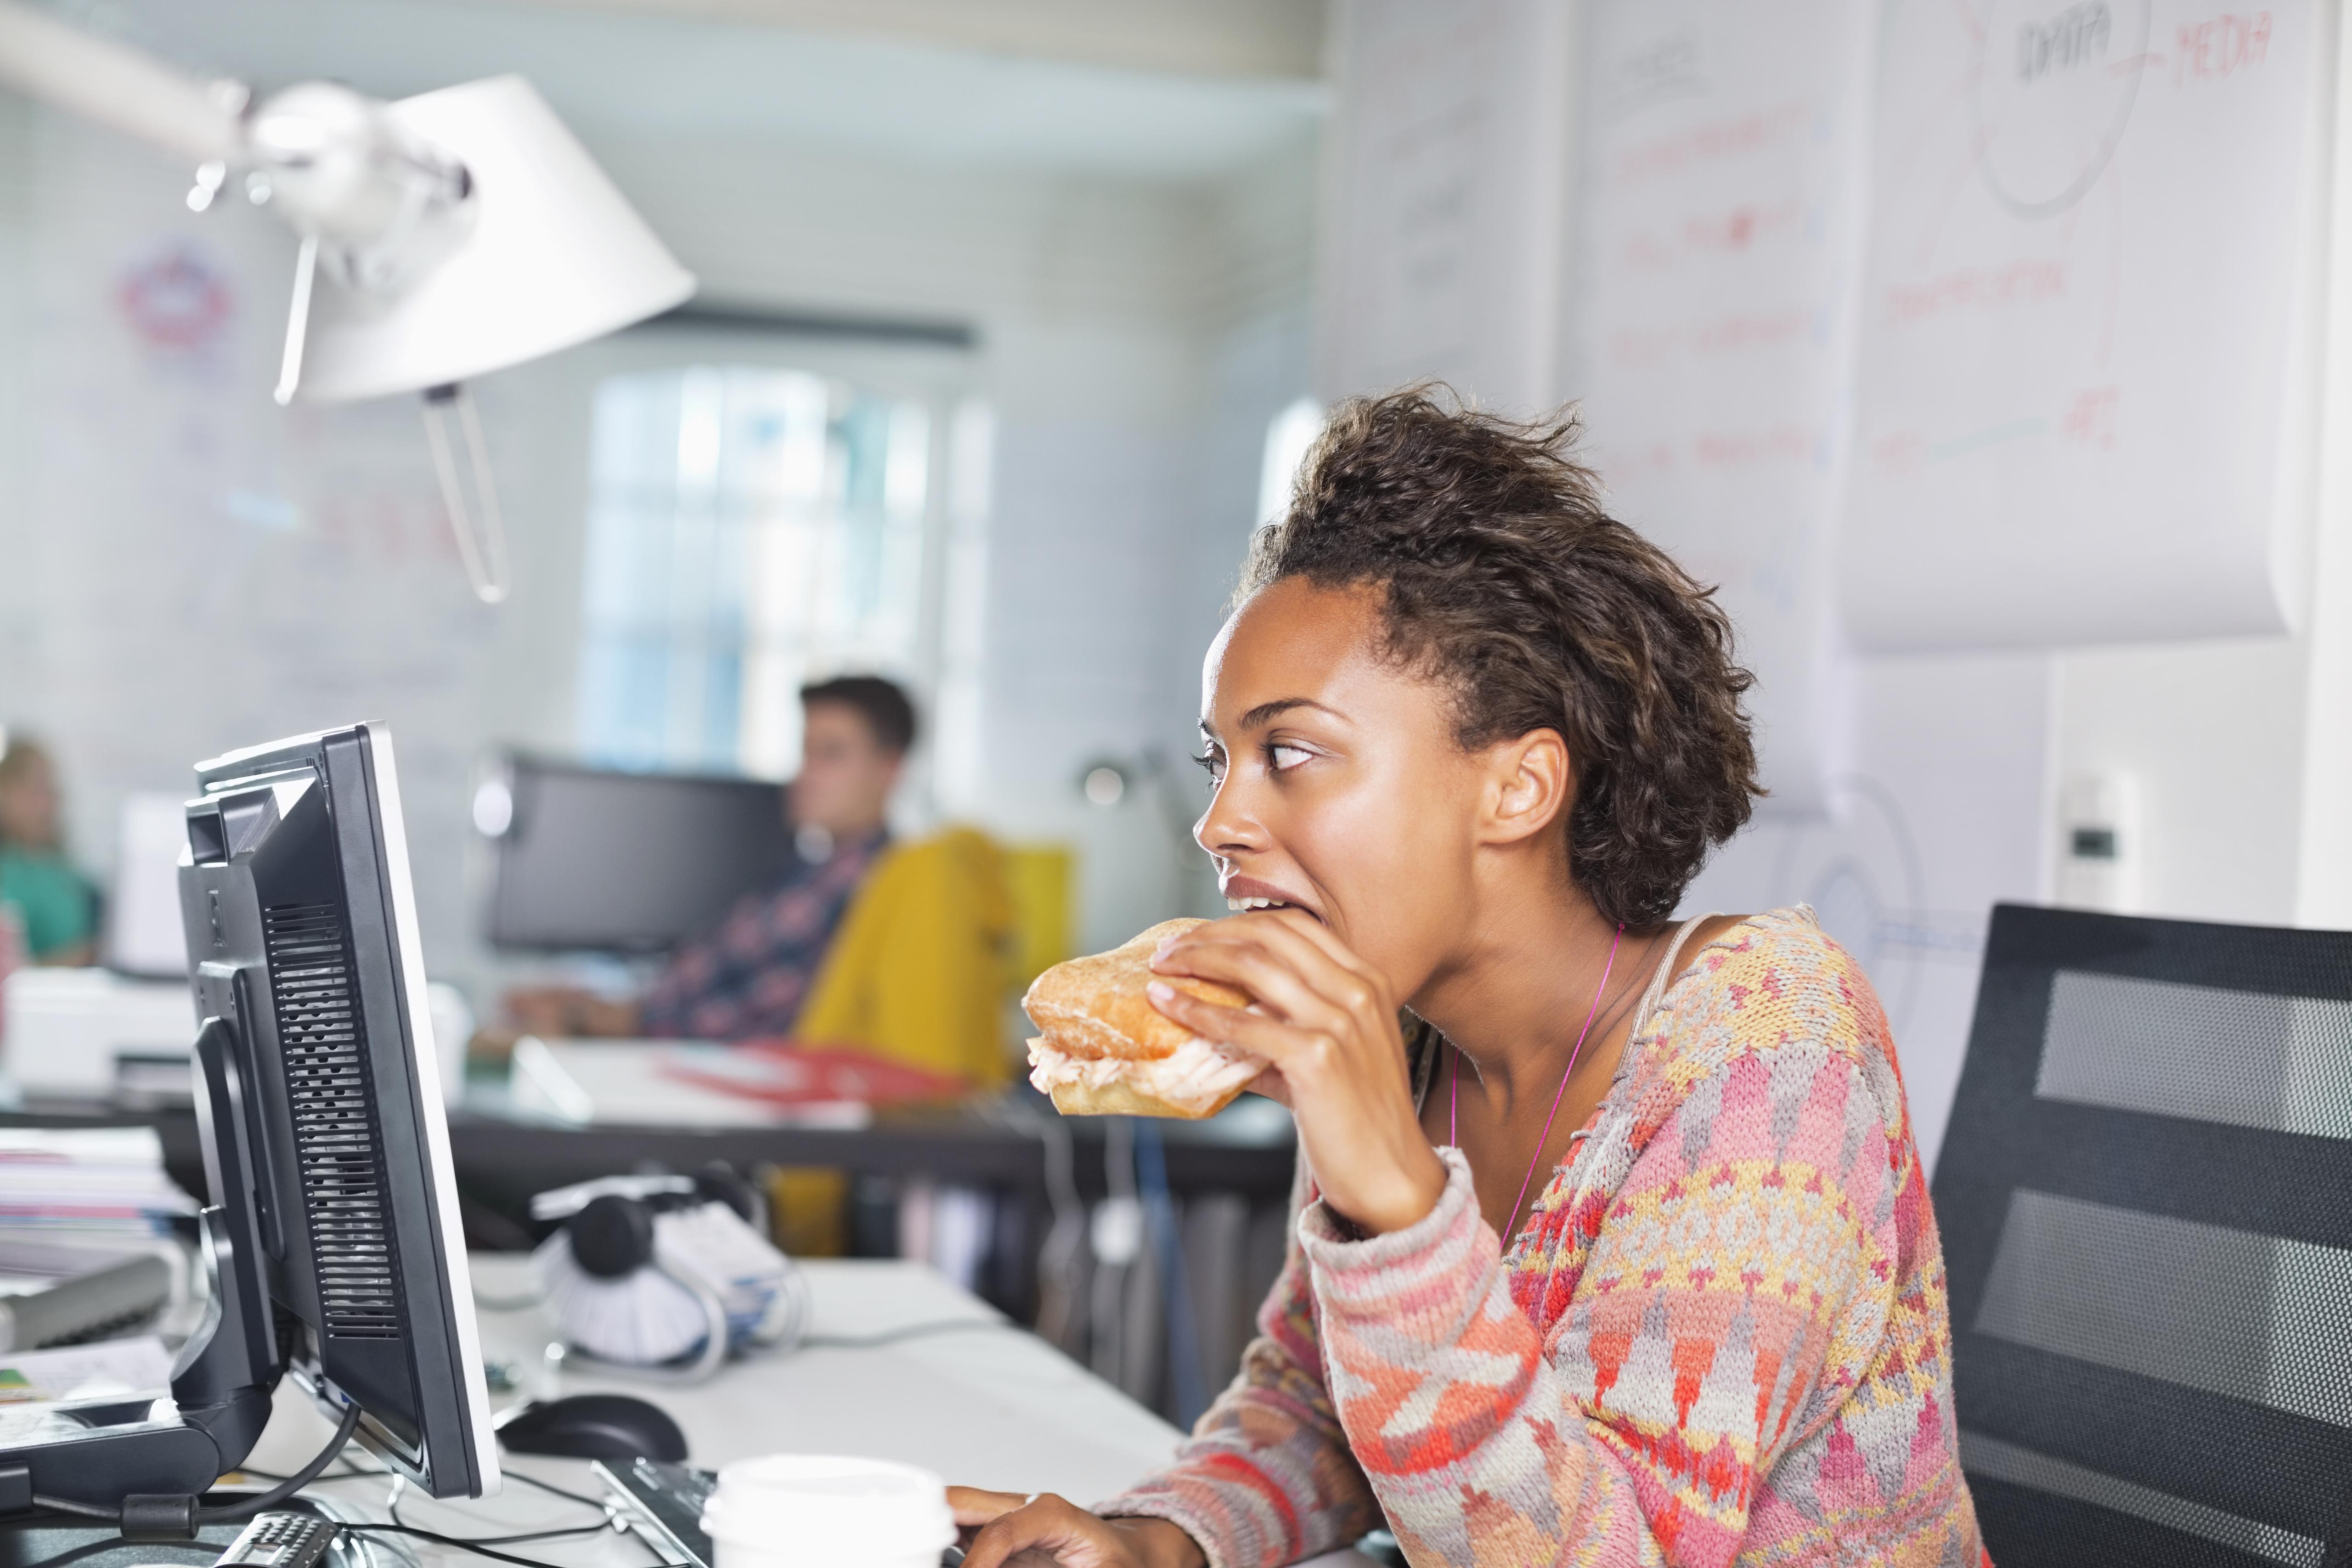 Businesswoman eating burger at desk